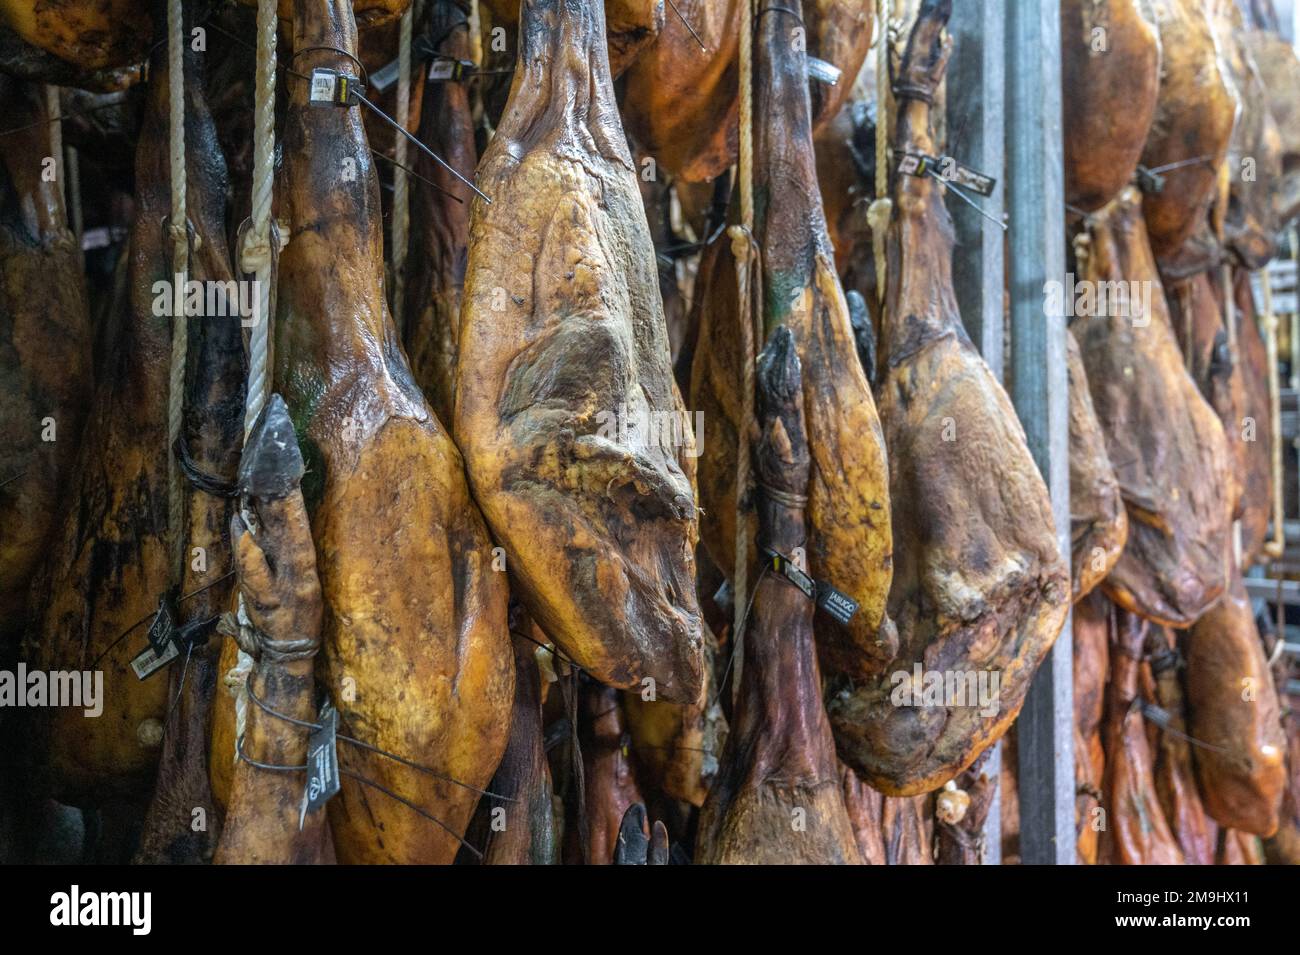 Production of iberian ham (cured ham), Puerto Gil, Spain Stock Photo